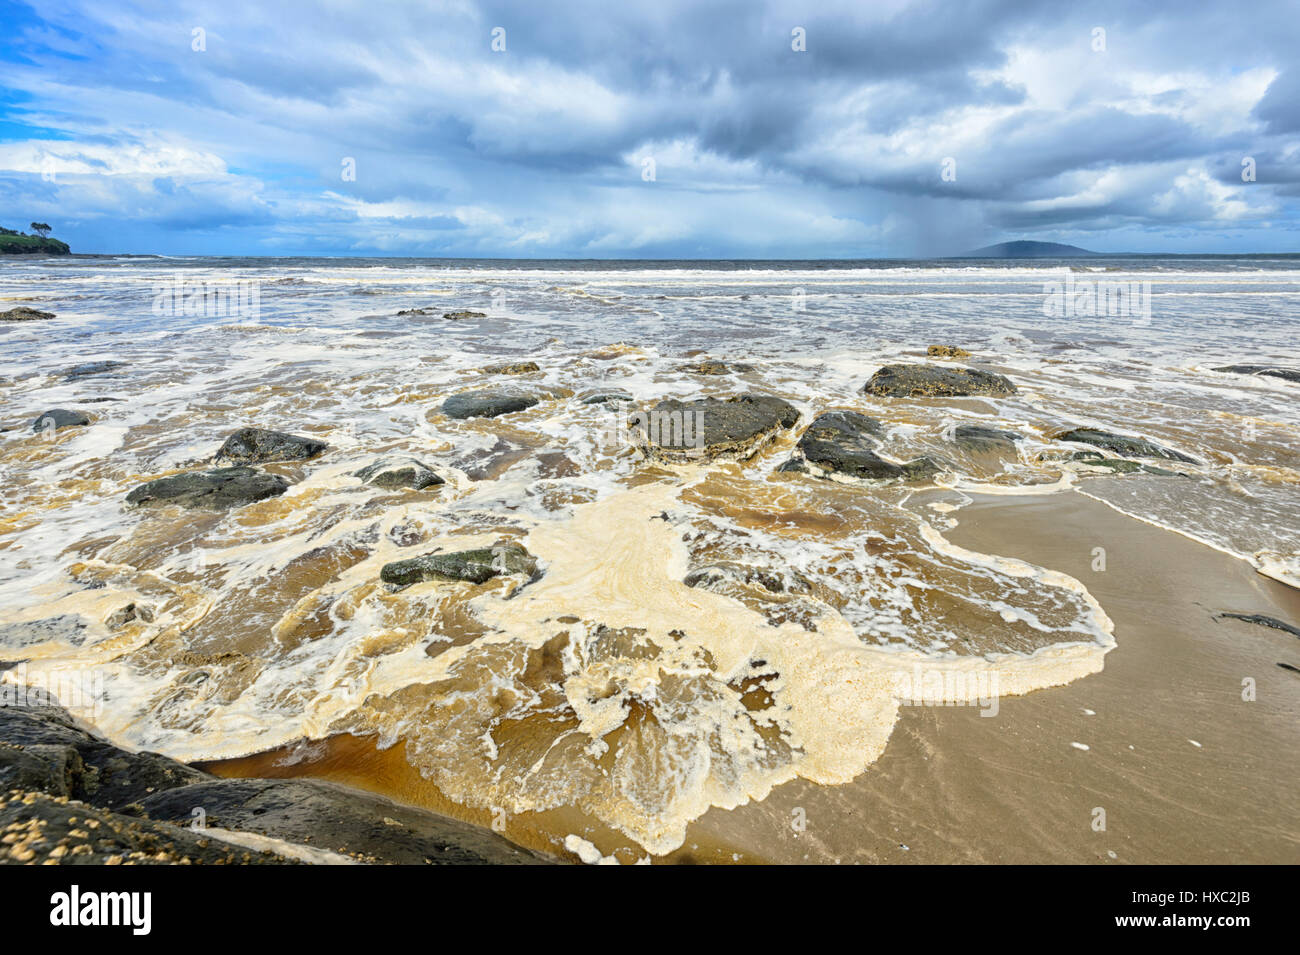 Sea Foam on the beach after a storm, Seven Mile Beach, Gerroa, Illawarra Coast, New South Wales, NSW, Australia Stock Photo